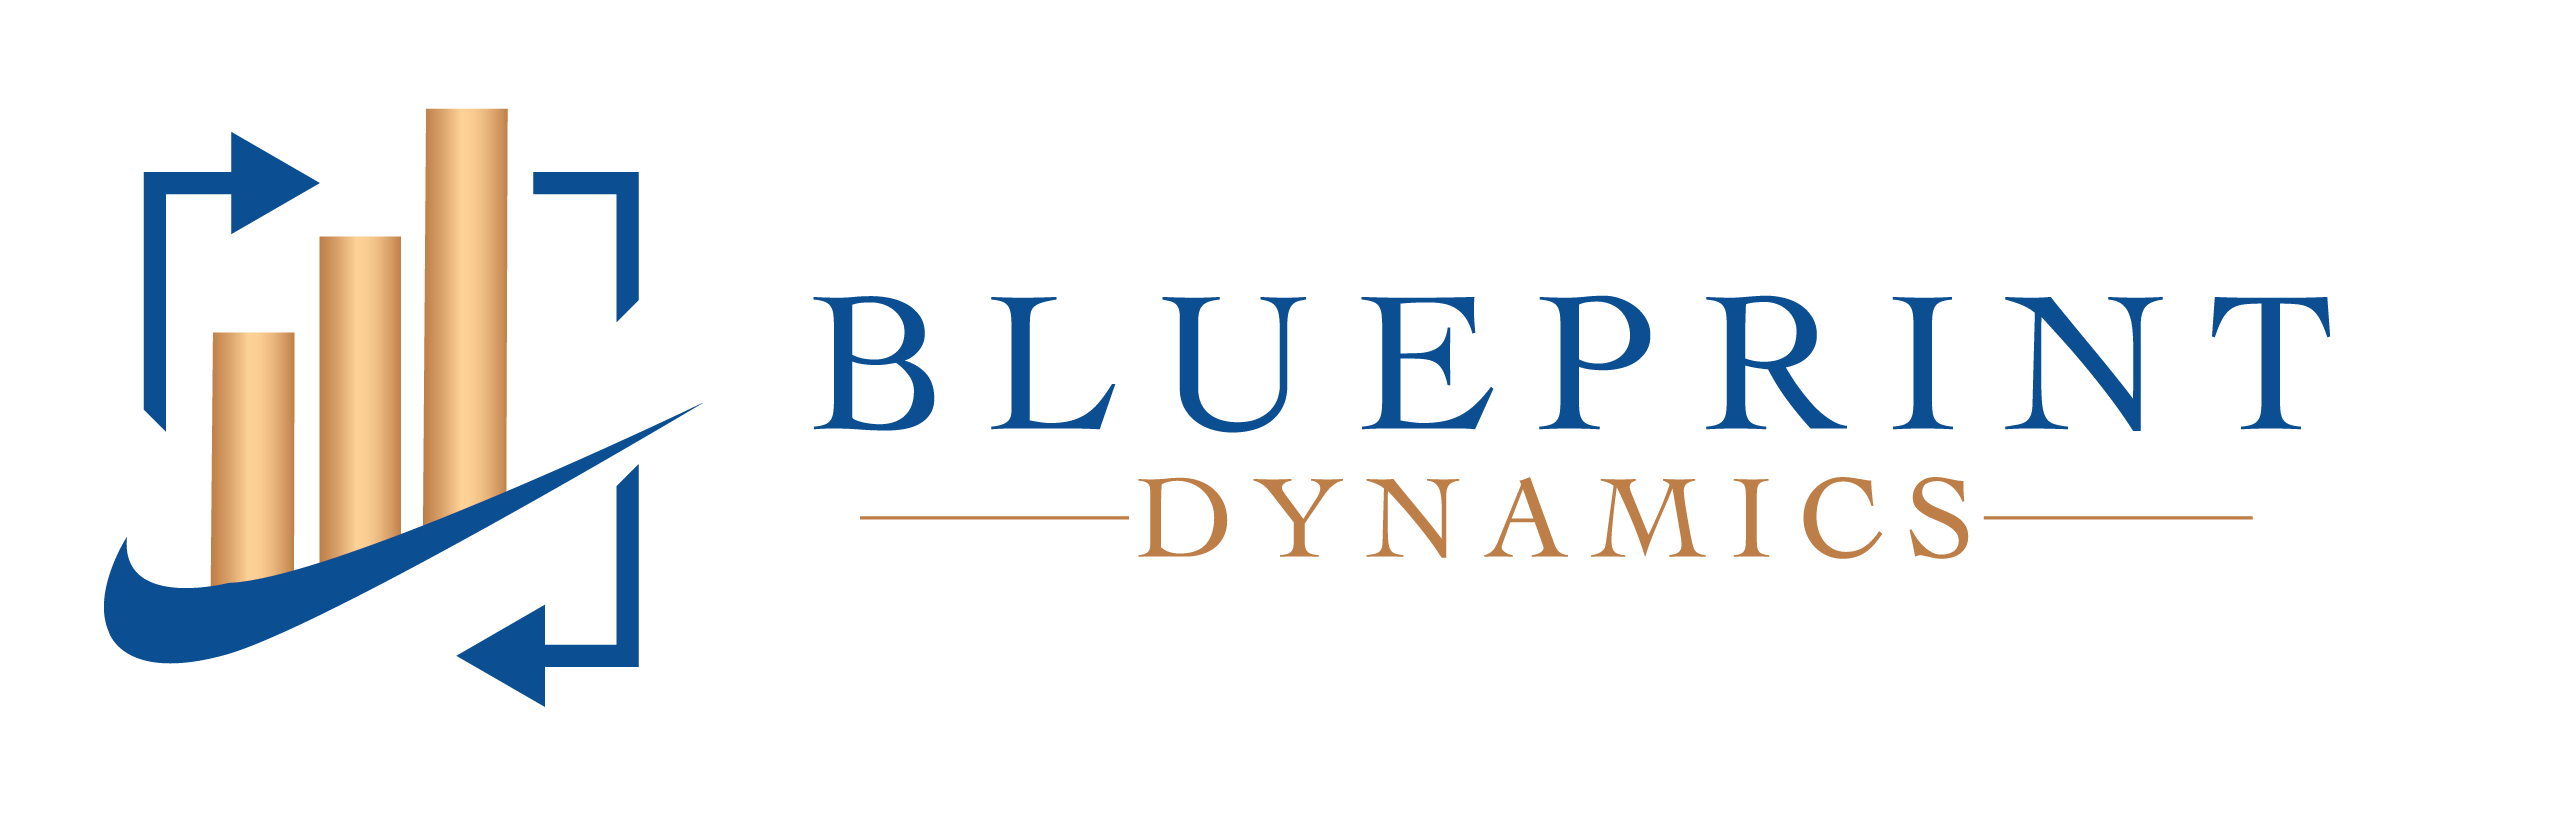 Blue Print Dynamics